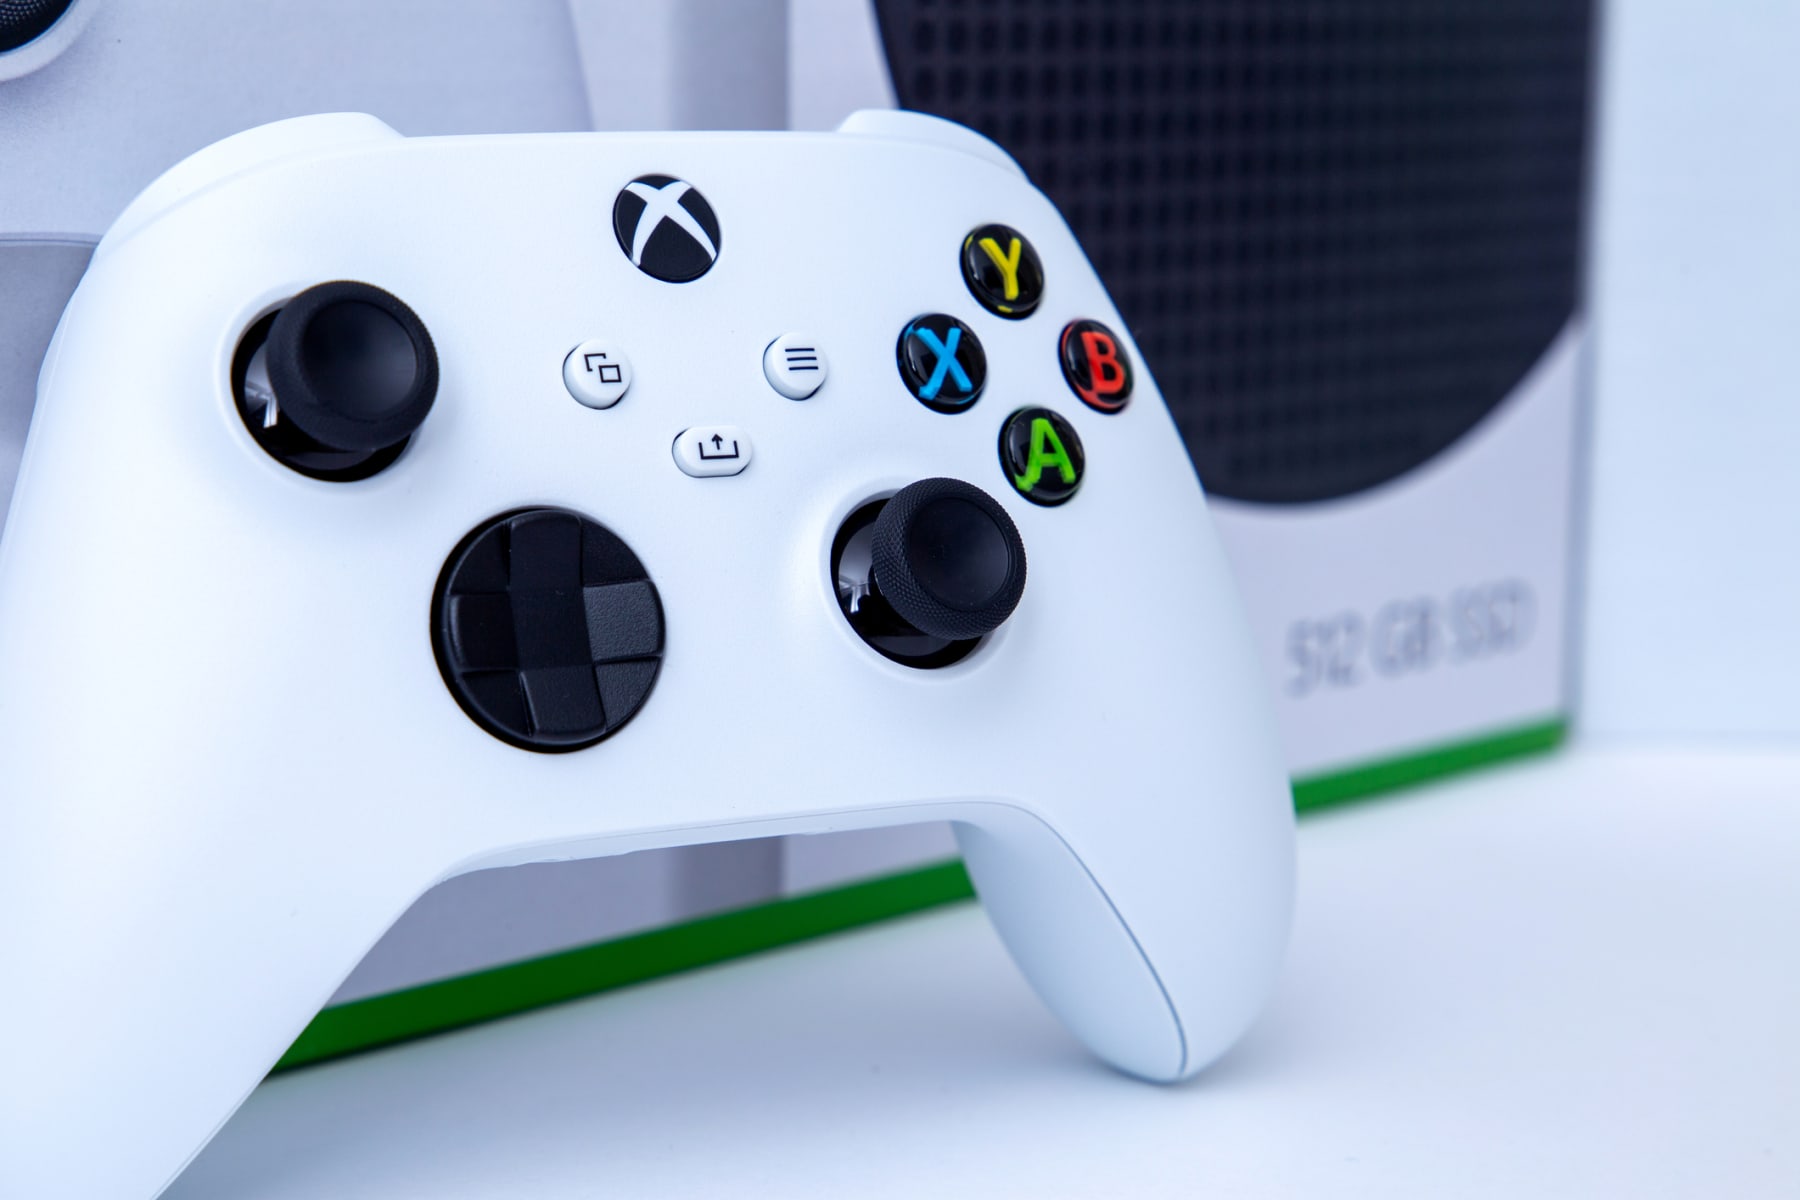 Xbox Series X Black Friday Deals: Consoles, Bundles and Games